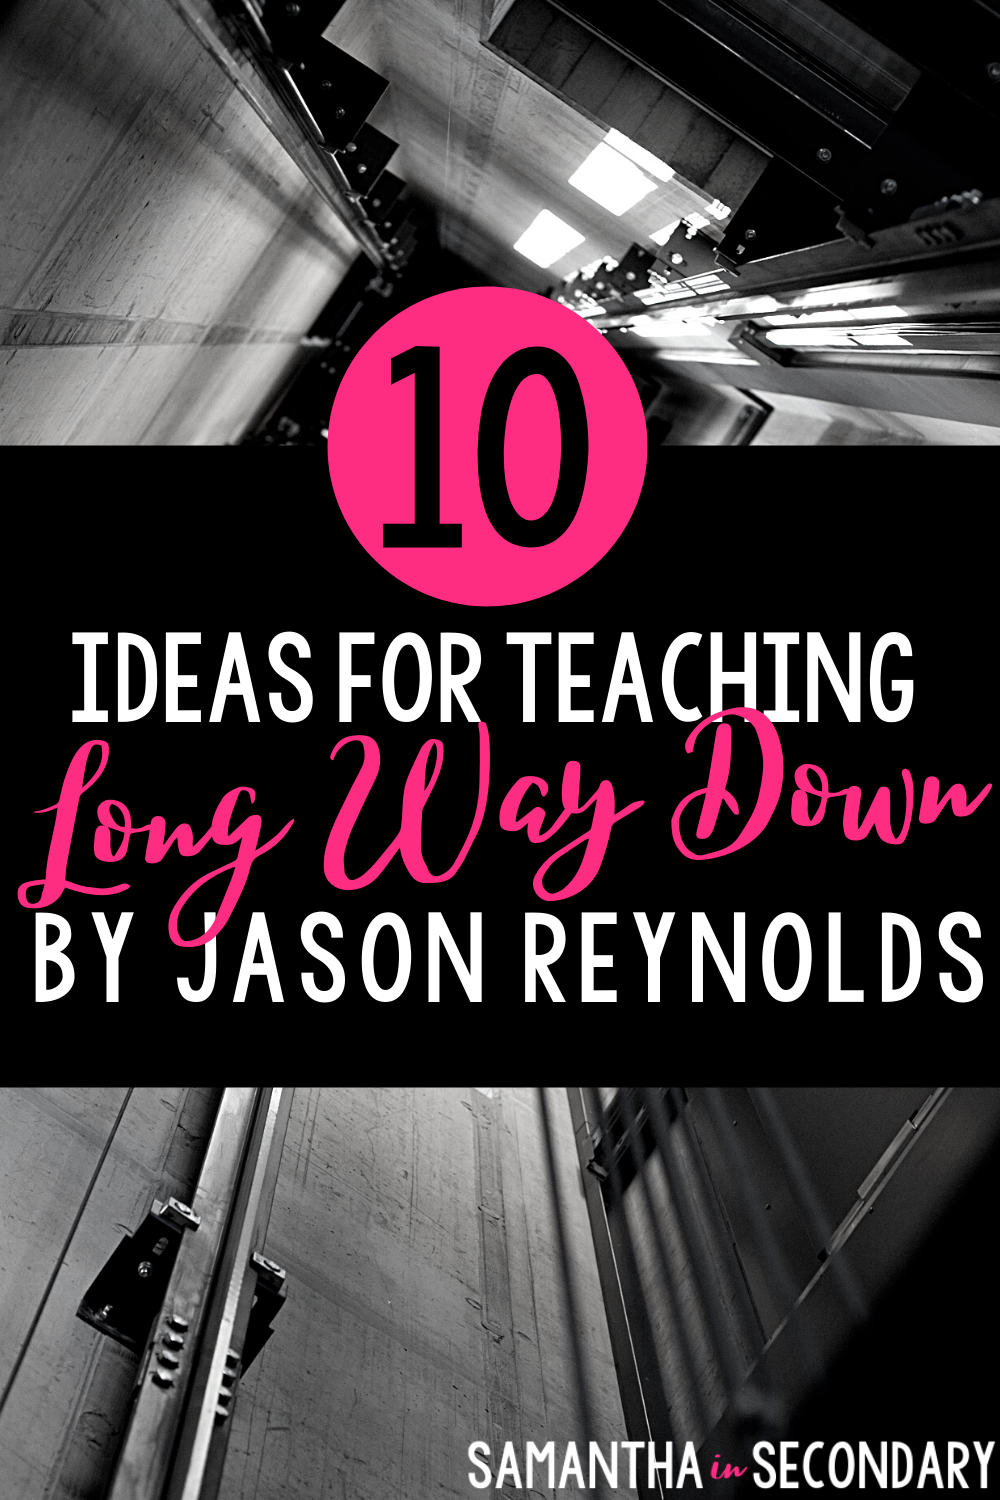 10 Ideas for Teaching Long Way Down by Jason Reynolds - Samantha